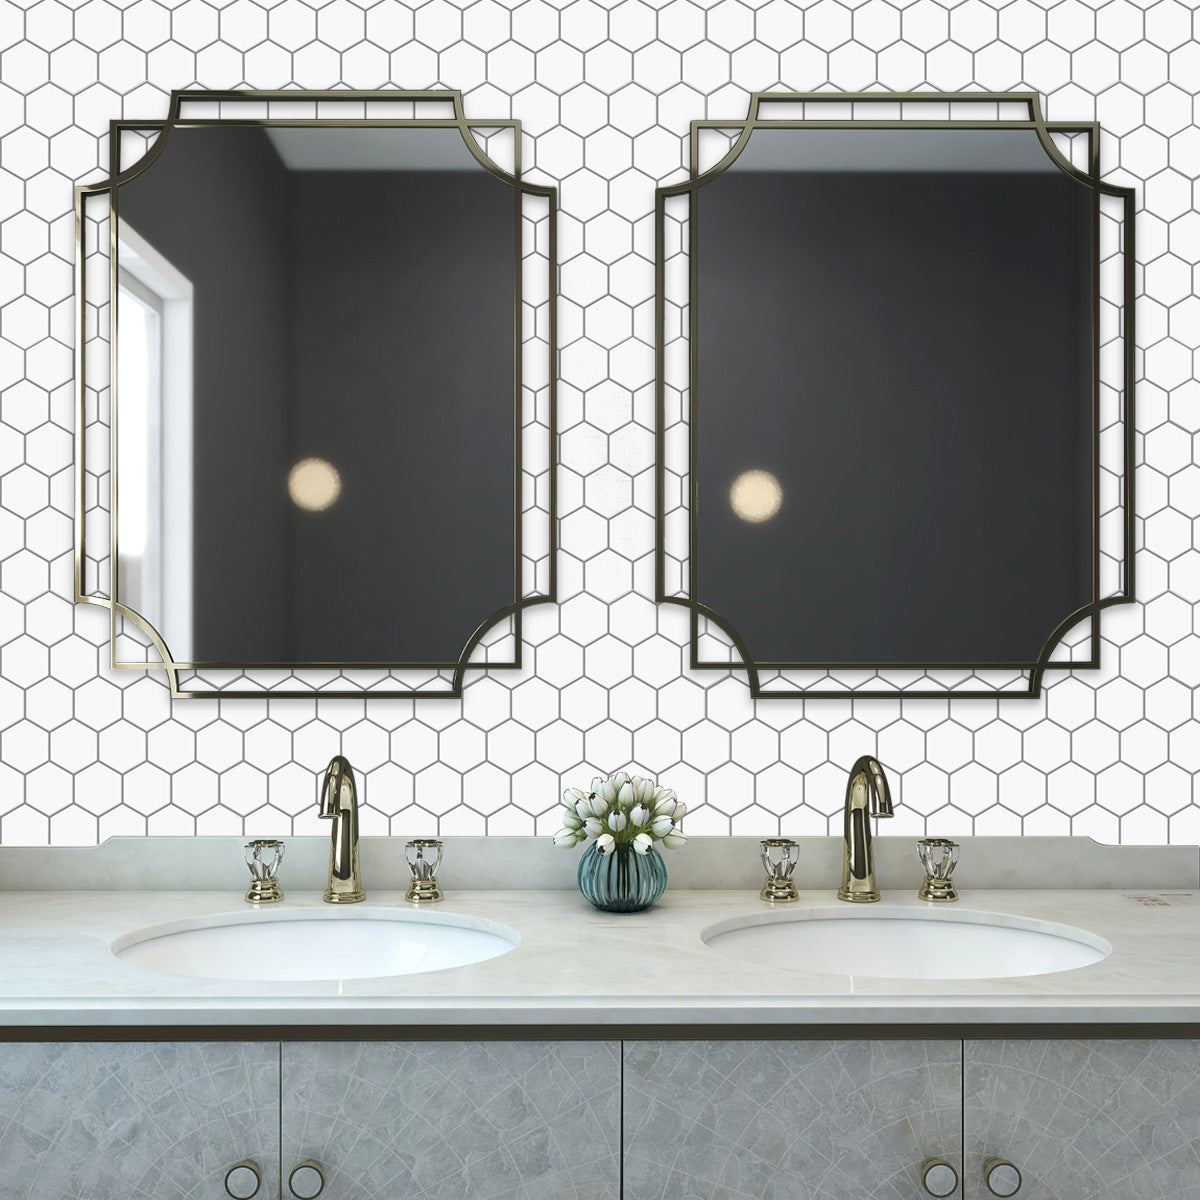 White hexagon tiles above vanity in bathroom